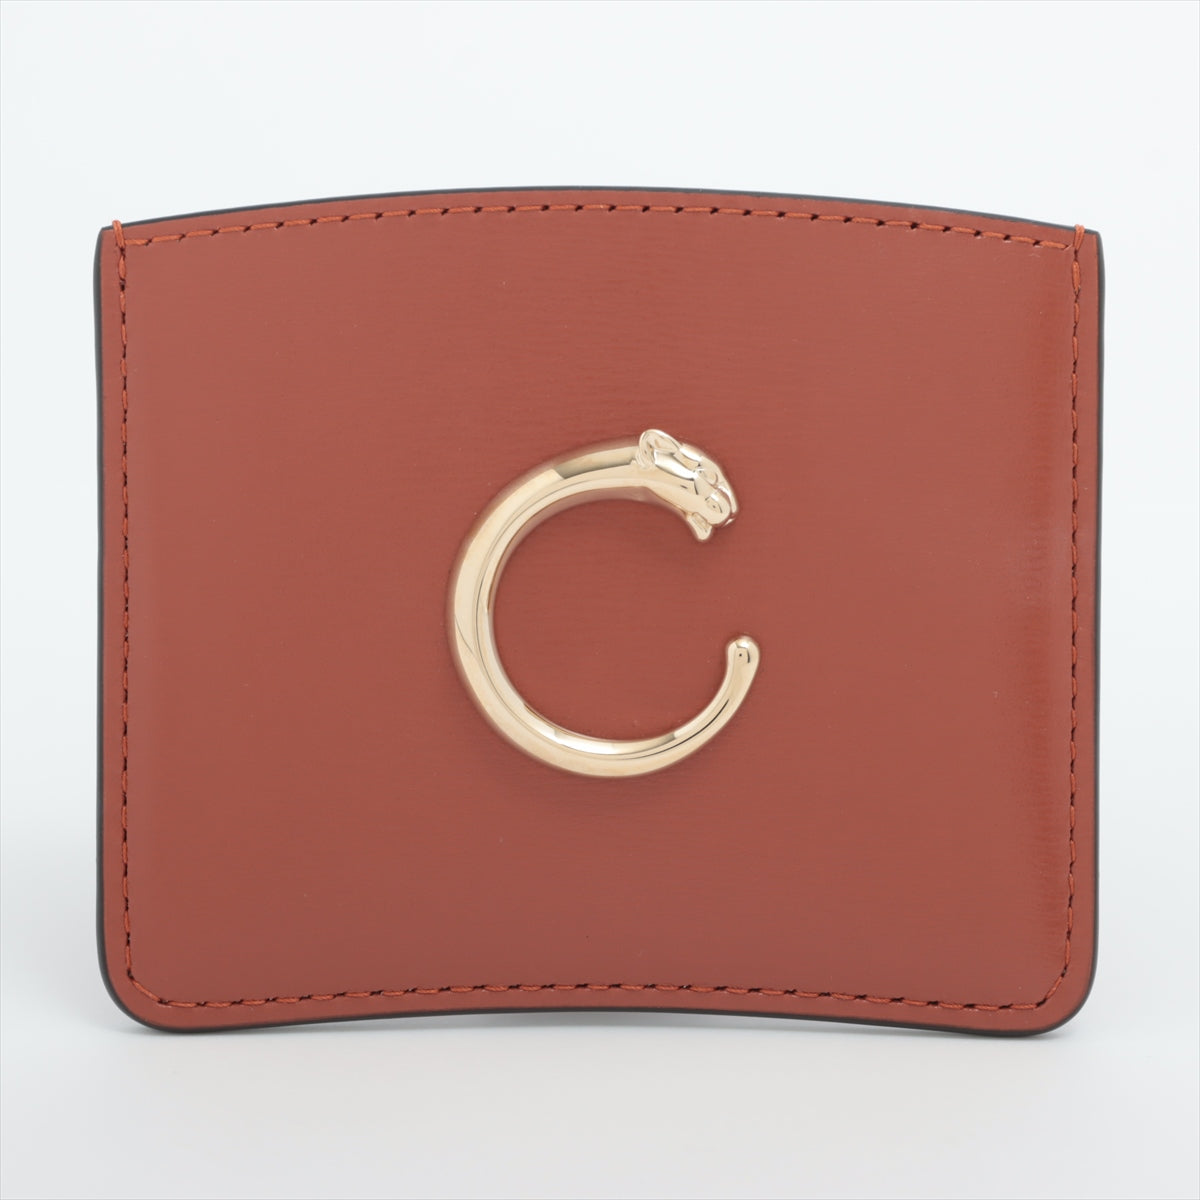 Cartier Panthère Leather Card Case Brown